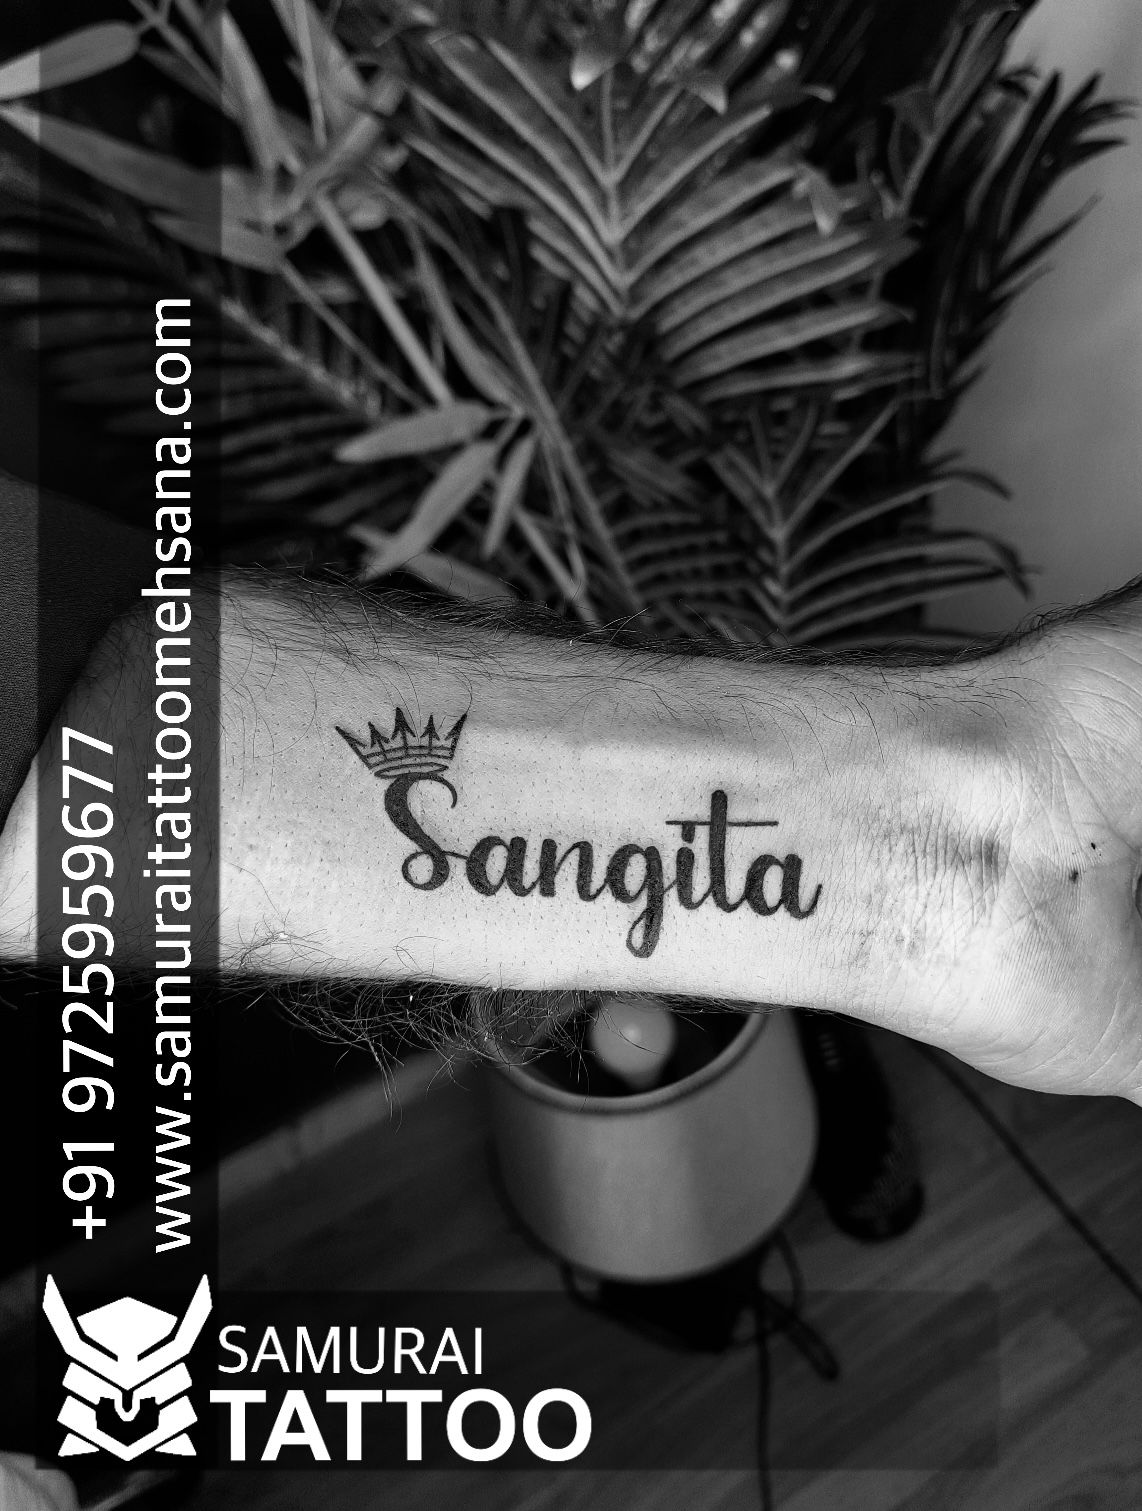 Sangita name tattoo mehndi design || Name tattoo mehndi design || Nk  mehendi arts. - YouTube